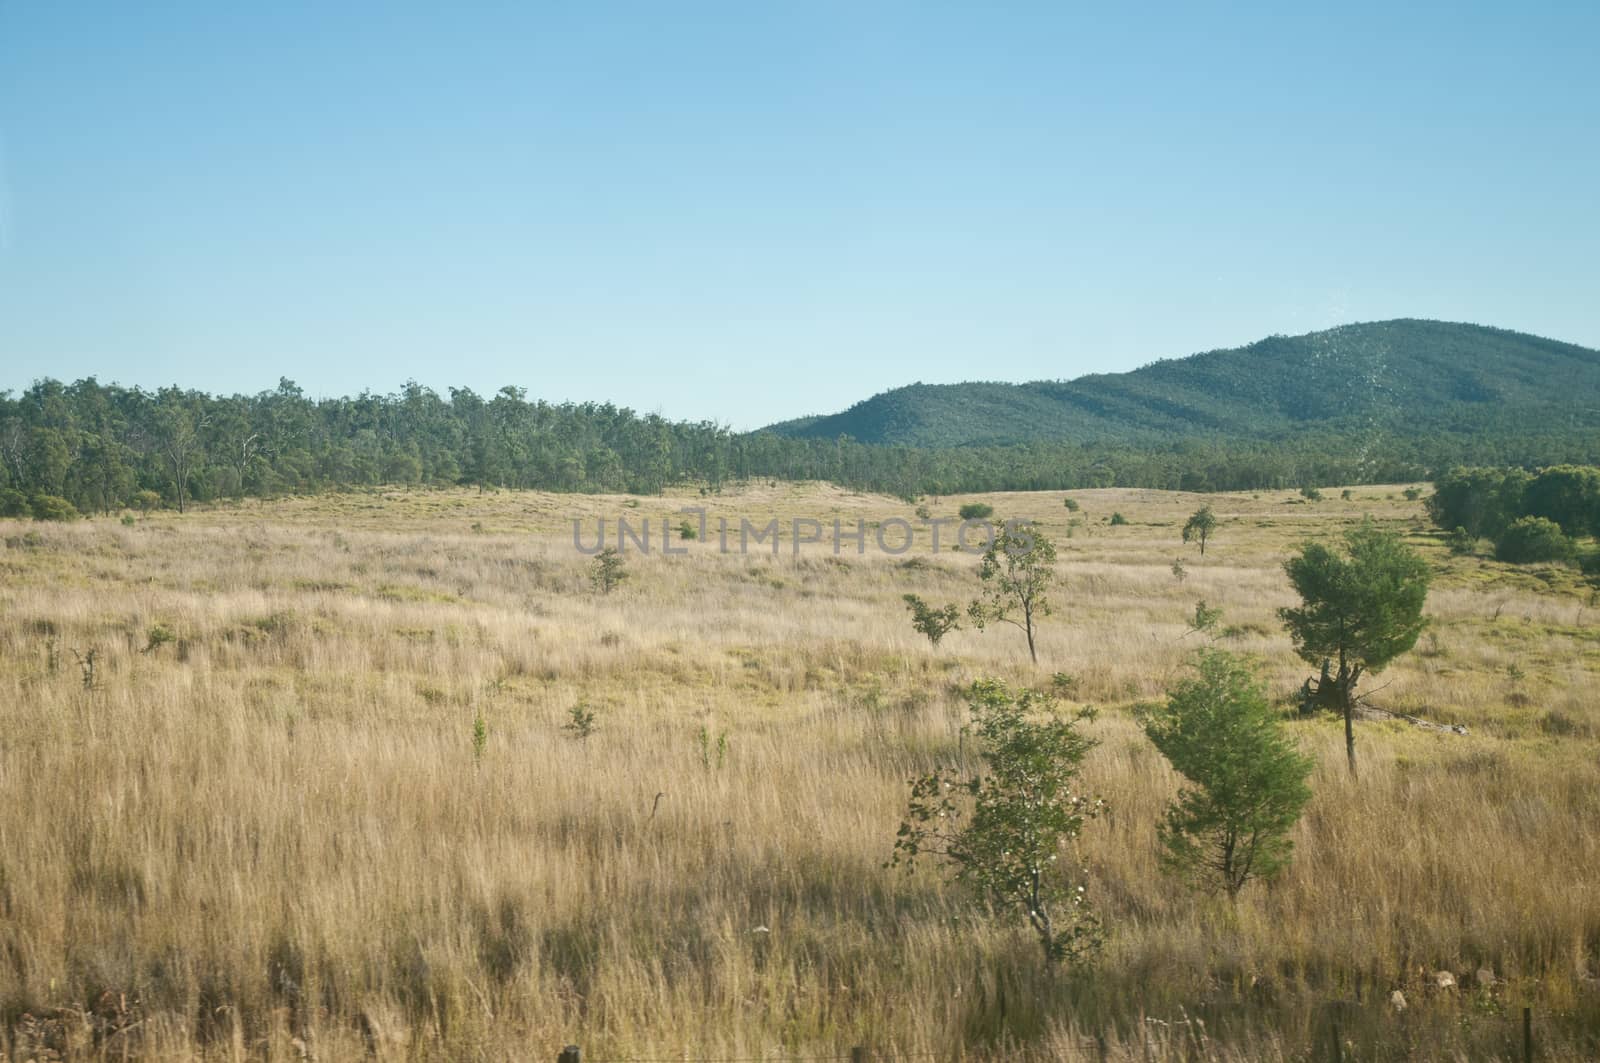 Dry savanna field in Outback Australia